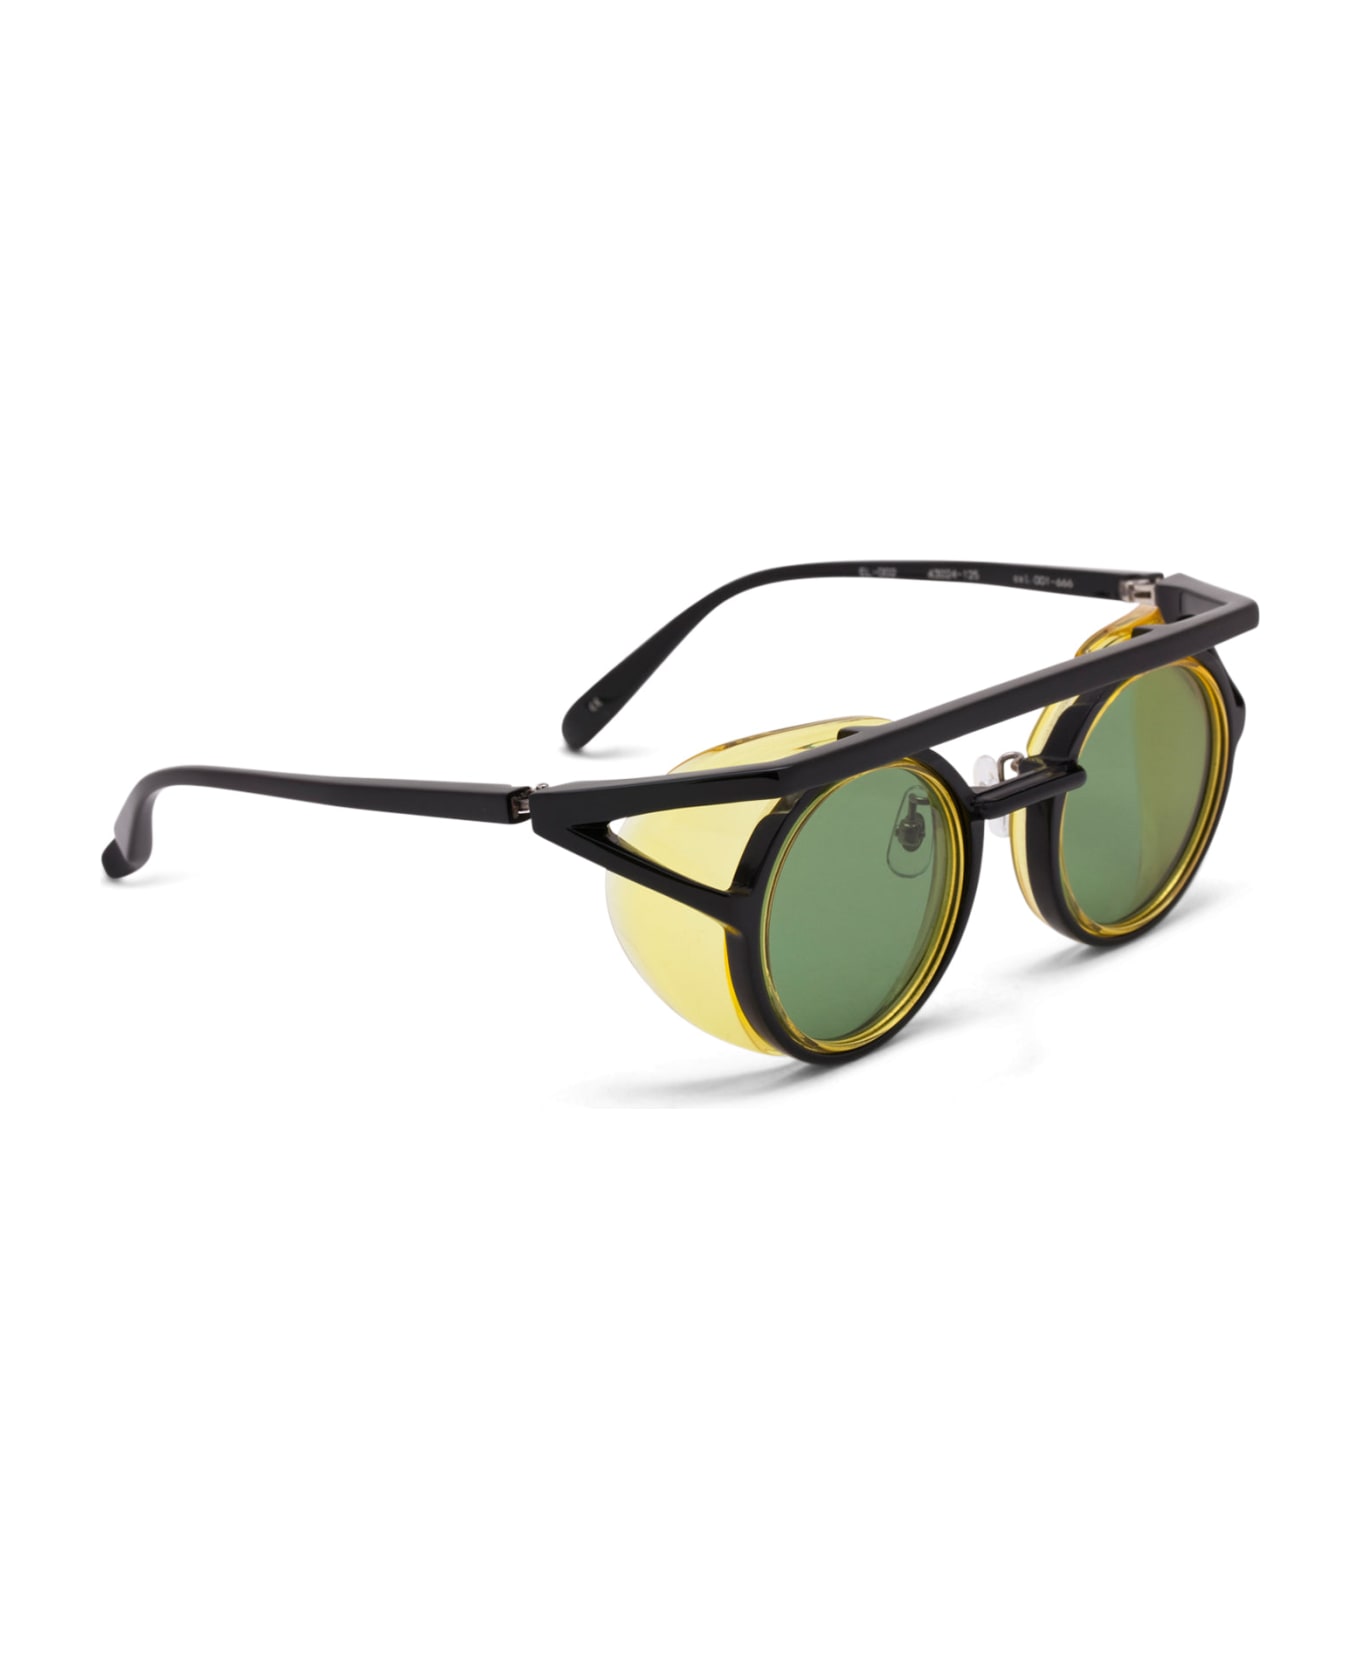 FACTORY900 El 002-001-666 Sunglasses - transparent black/yellow サングラス